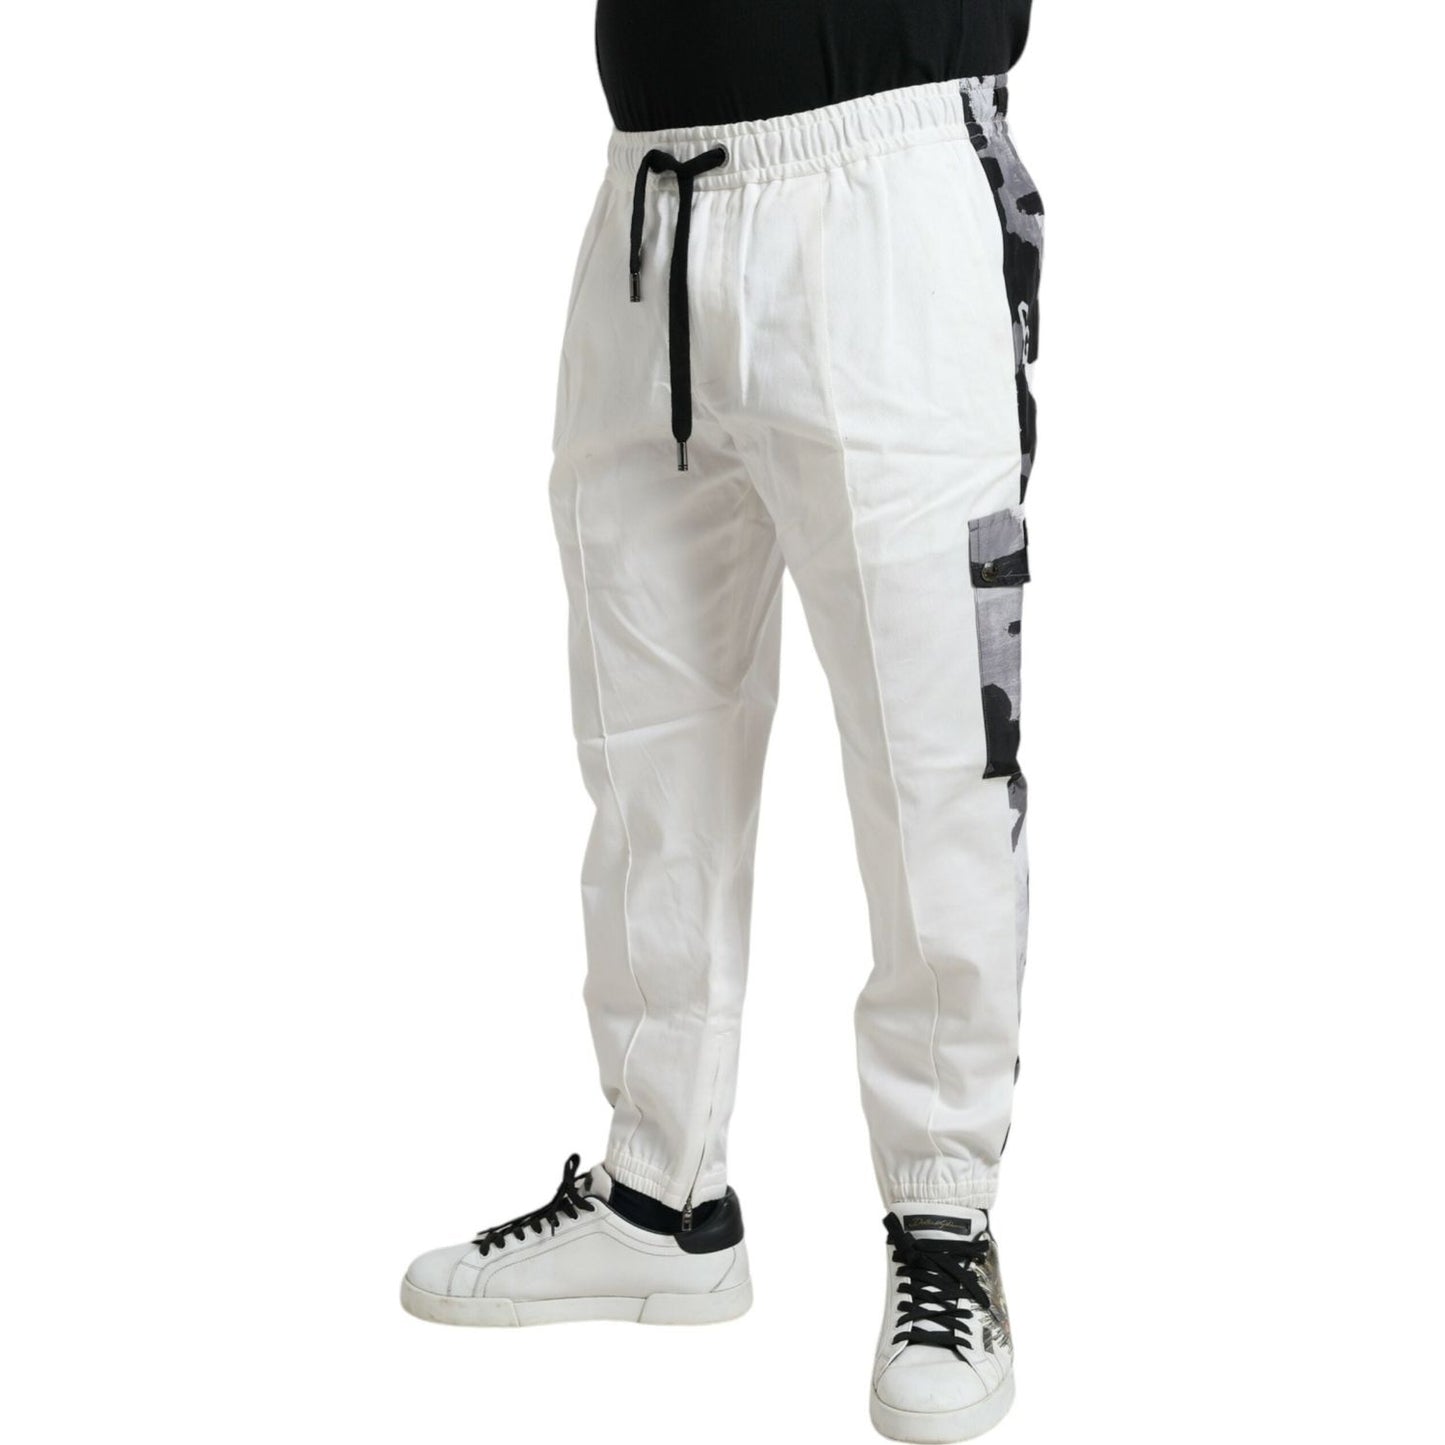 Dolce & Gabbana Elegant White Cotton Blend Jogger Pants white-cotton-blend-jogger-men-sweatpants-pants 465A0725-BG-scaled-8b458805-102.jpg